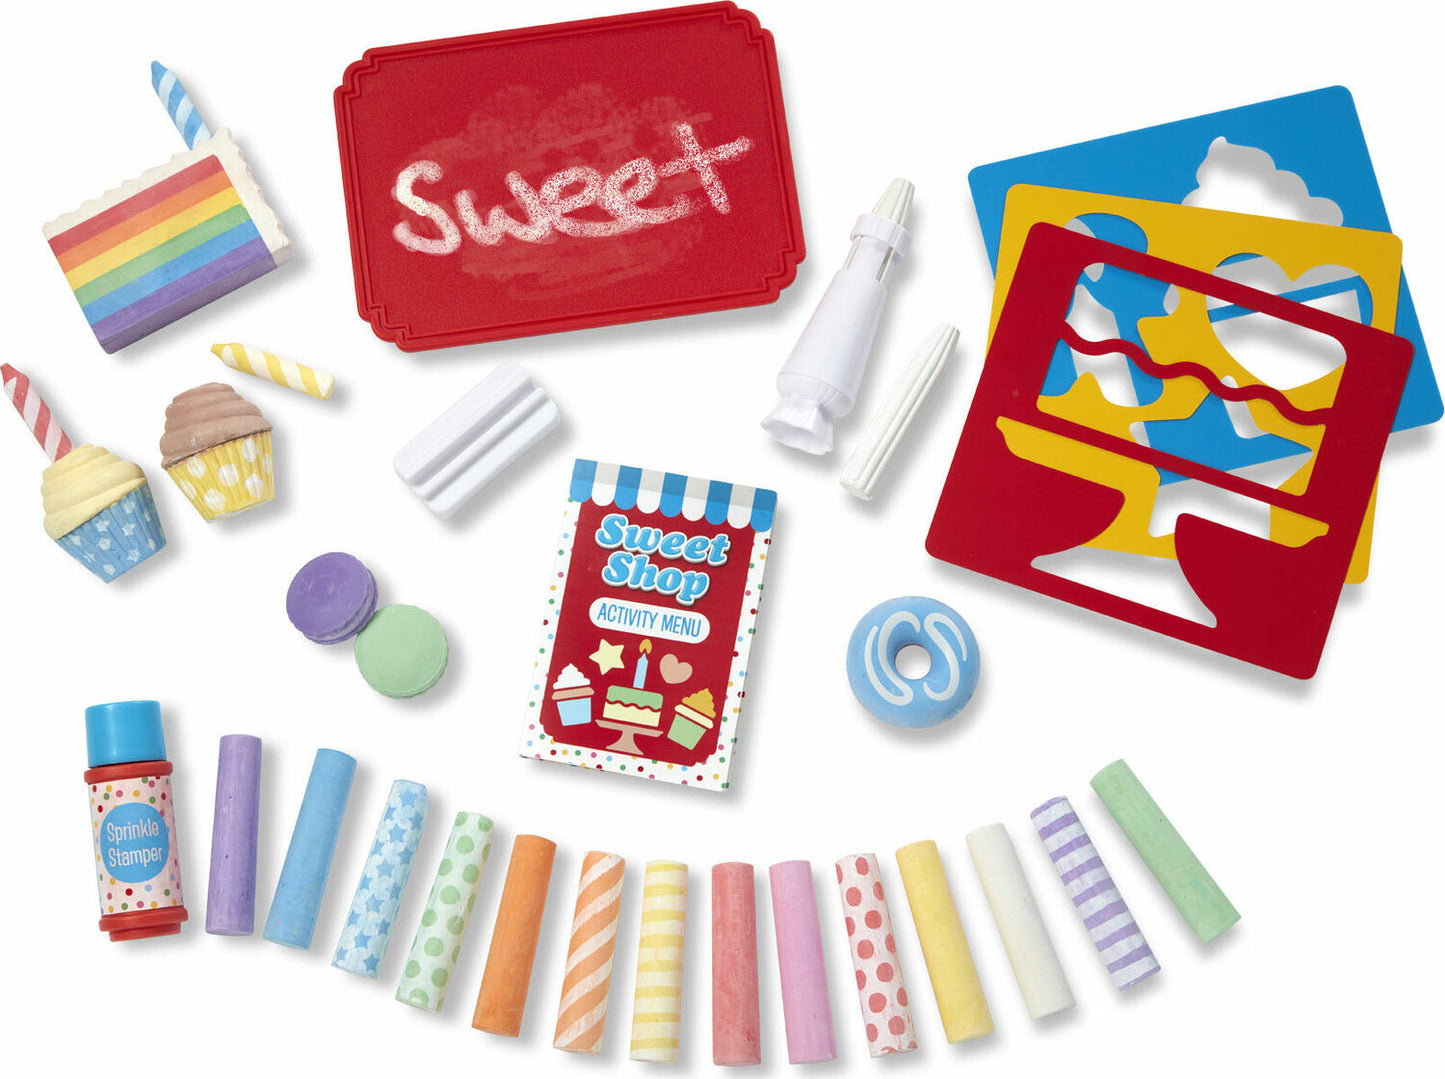 Sweet Shop Chalk Play Set